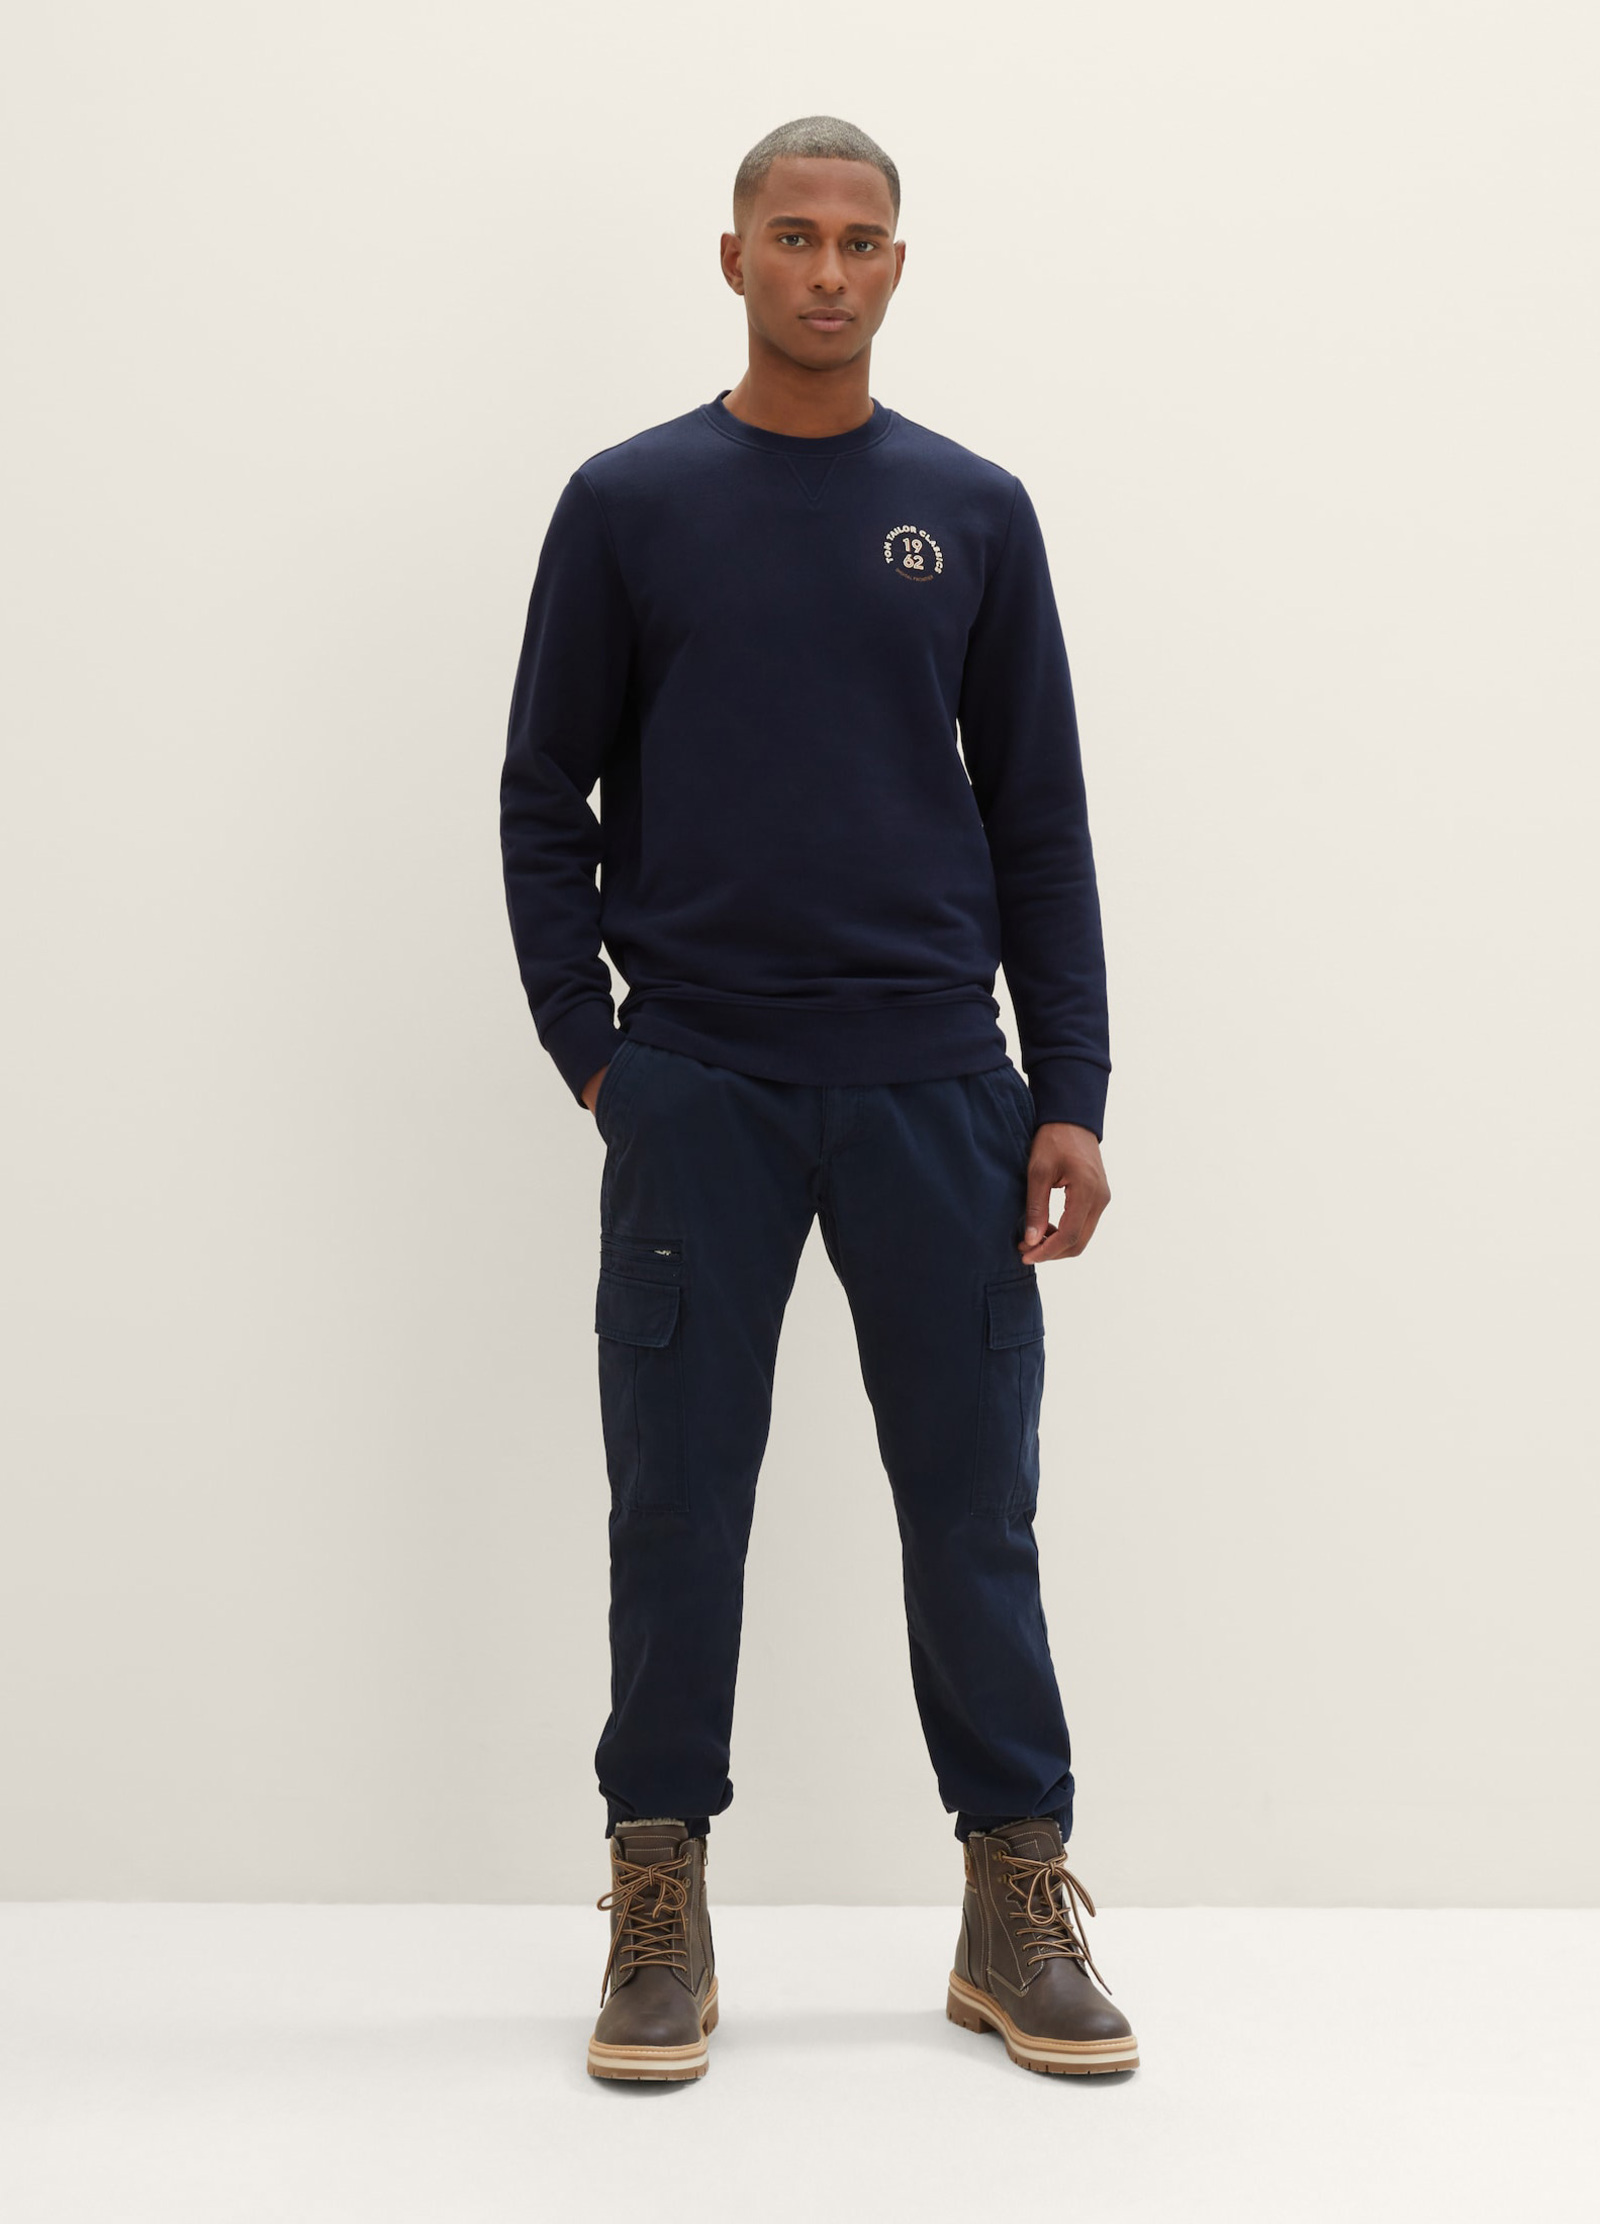 Tom Tailor® Sweatshirt With A Print - Sky Captain Blue Rozmiar L